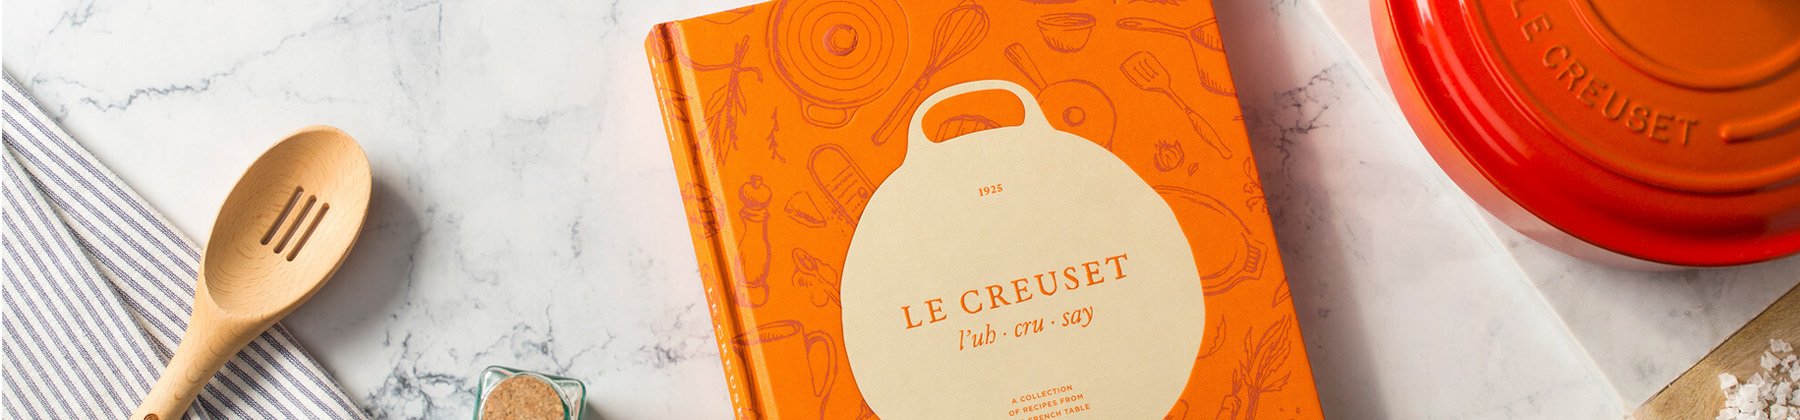 Photo of Le Creuset cookbook.